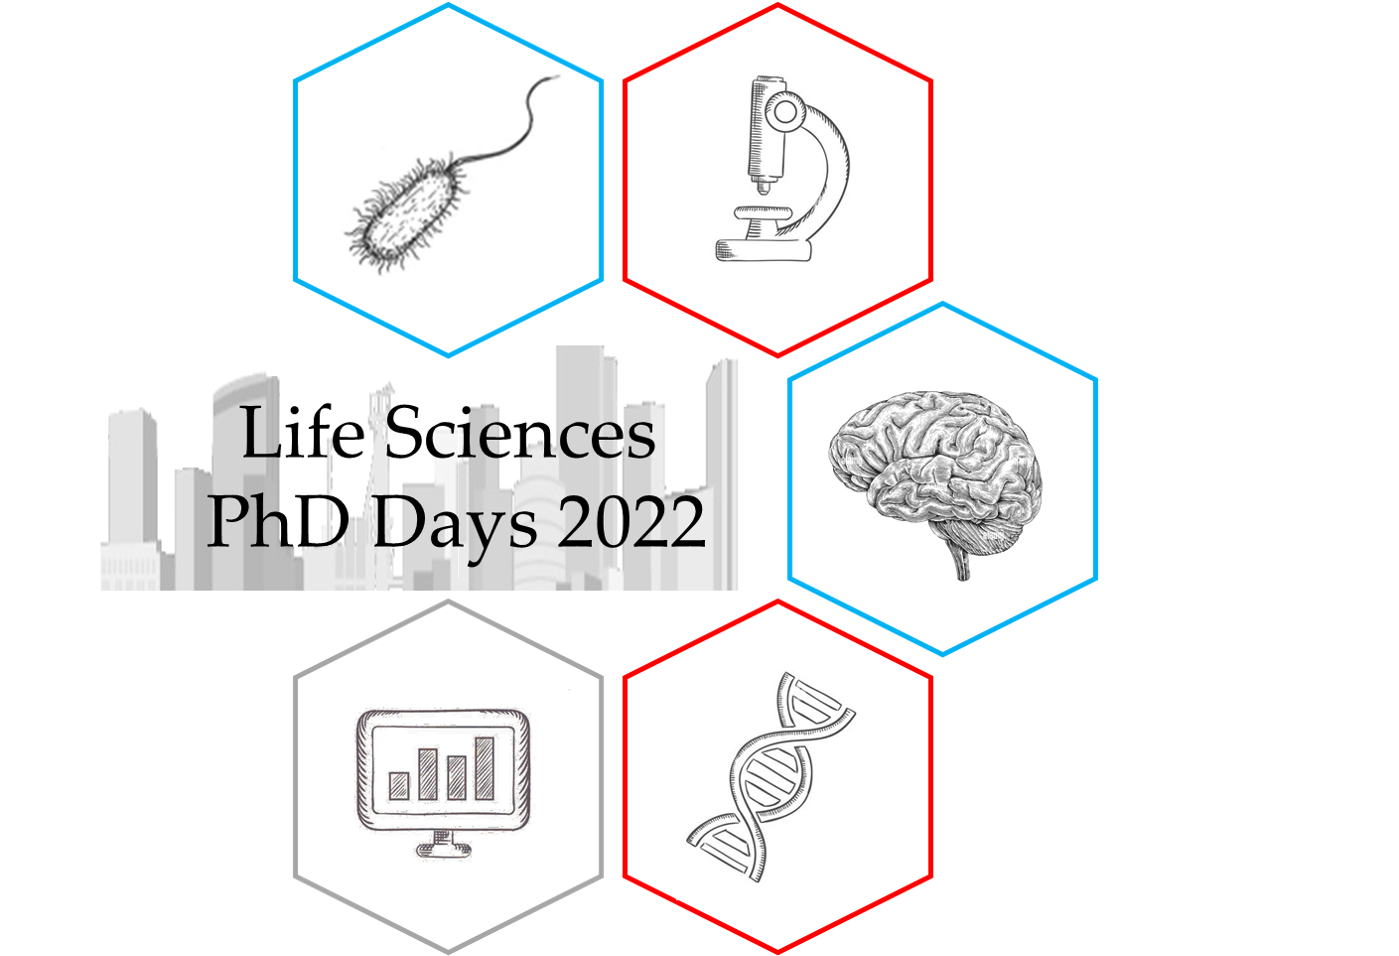 phd scientific days 2022